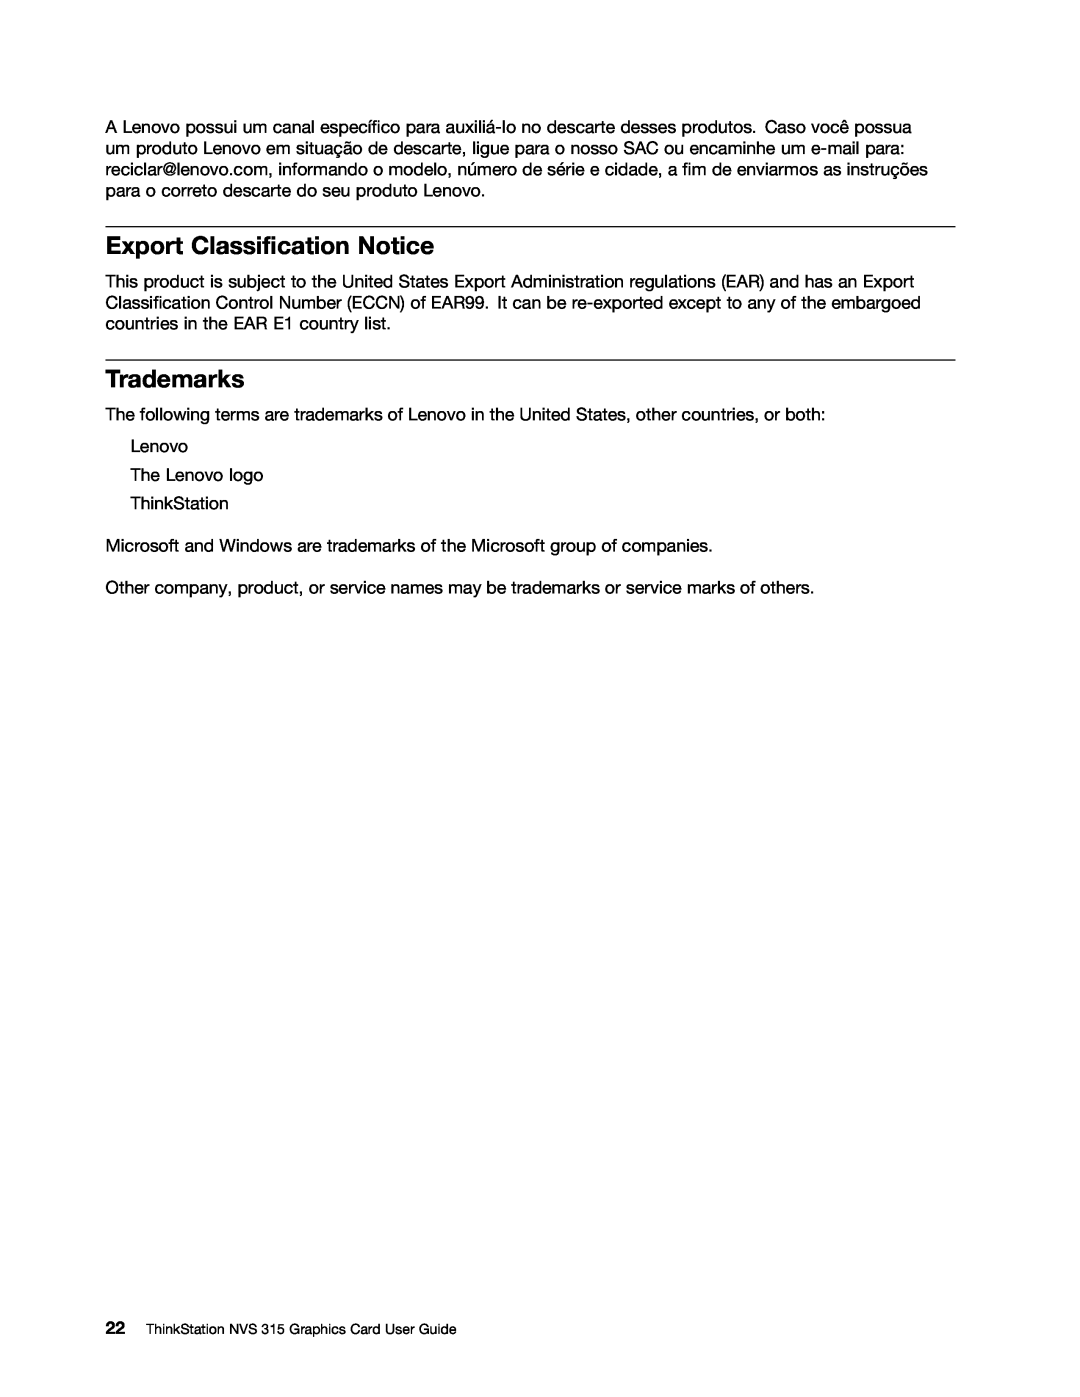 Lenovo NVS 315 manual Export Classification Notice, Trademarks 